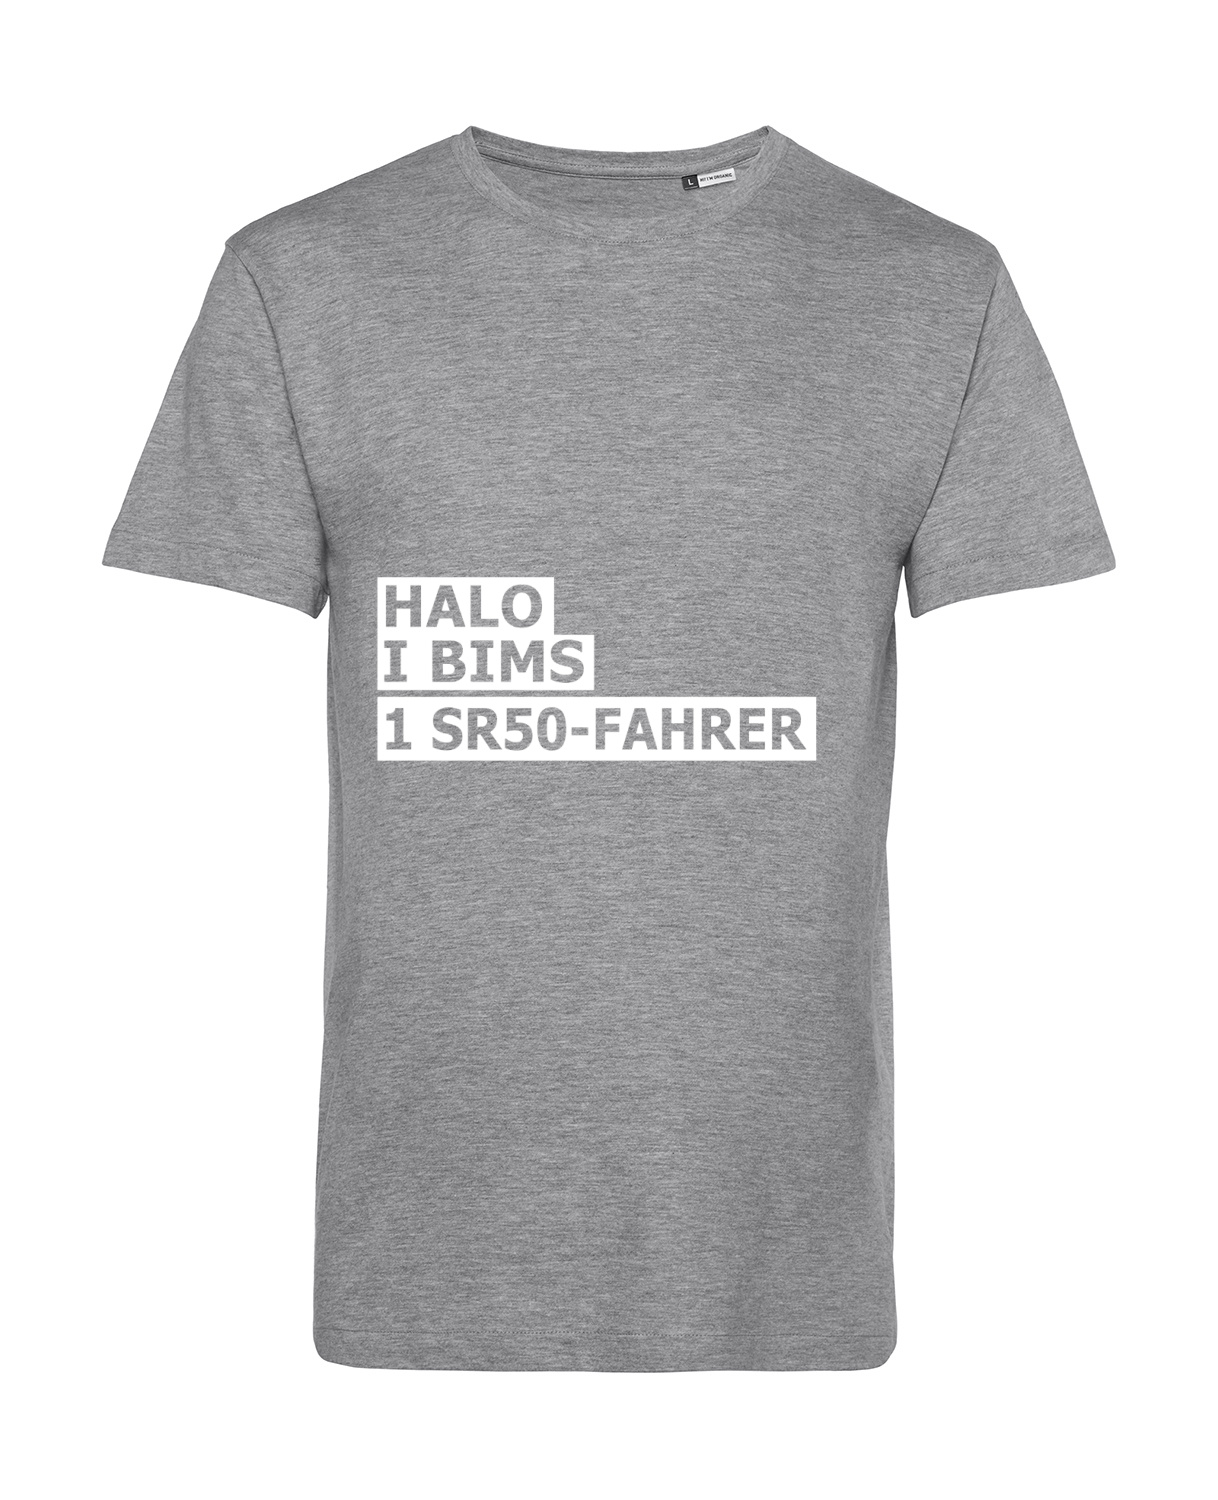 Nachhaltiges T-Shirt Herren 2Takter - Halo I bims 1 SR50-Fahrer